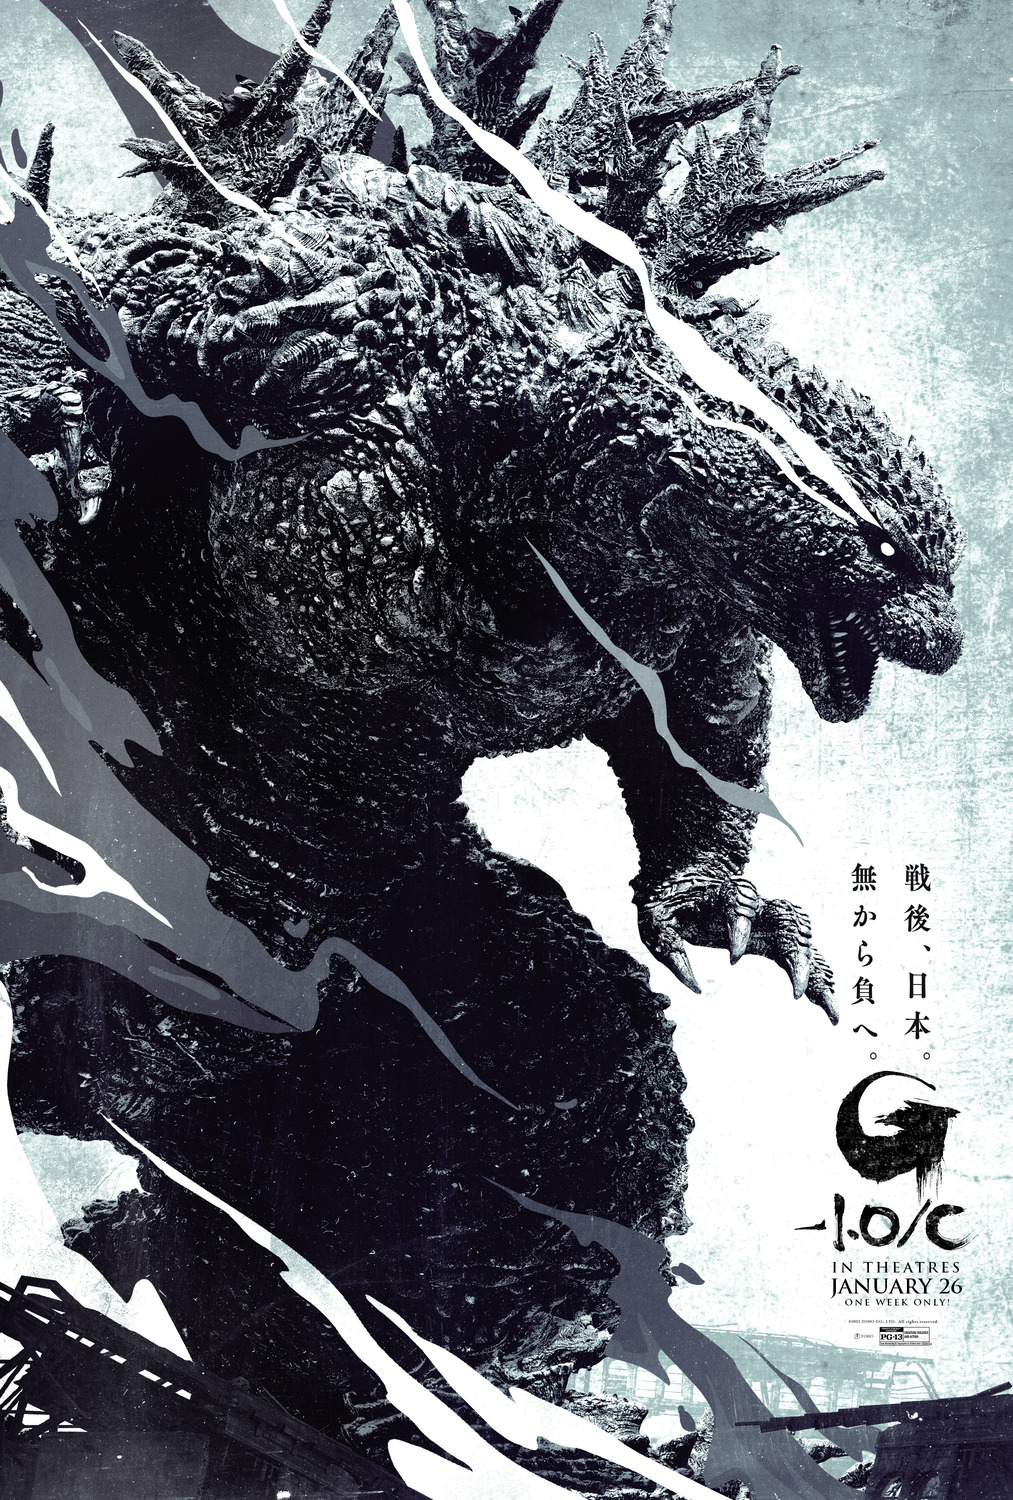 Extra Large Movie Poster Image for Godzilla: Minus One (#10 of 11)